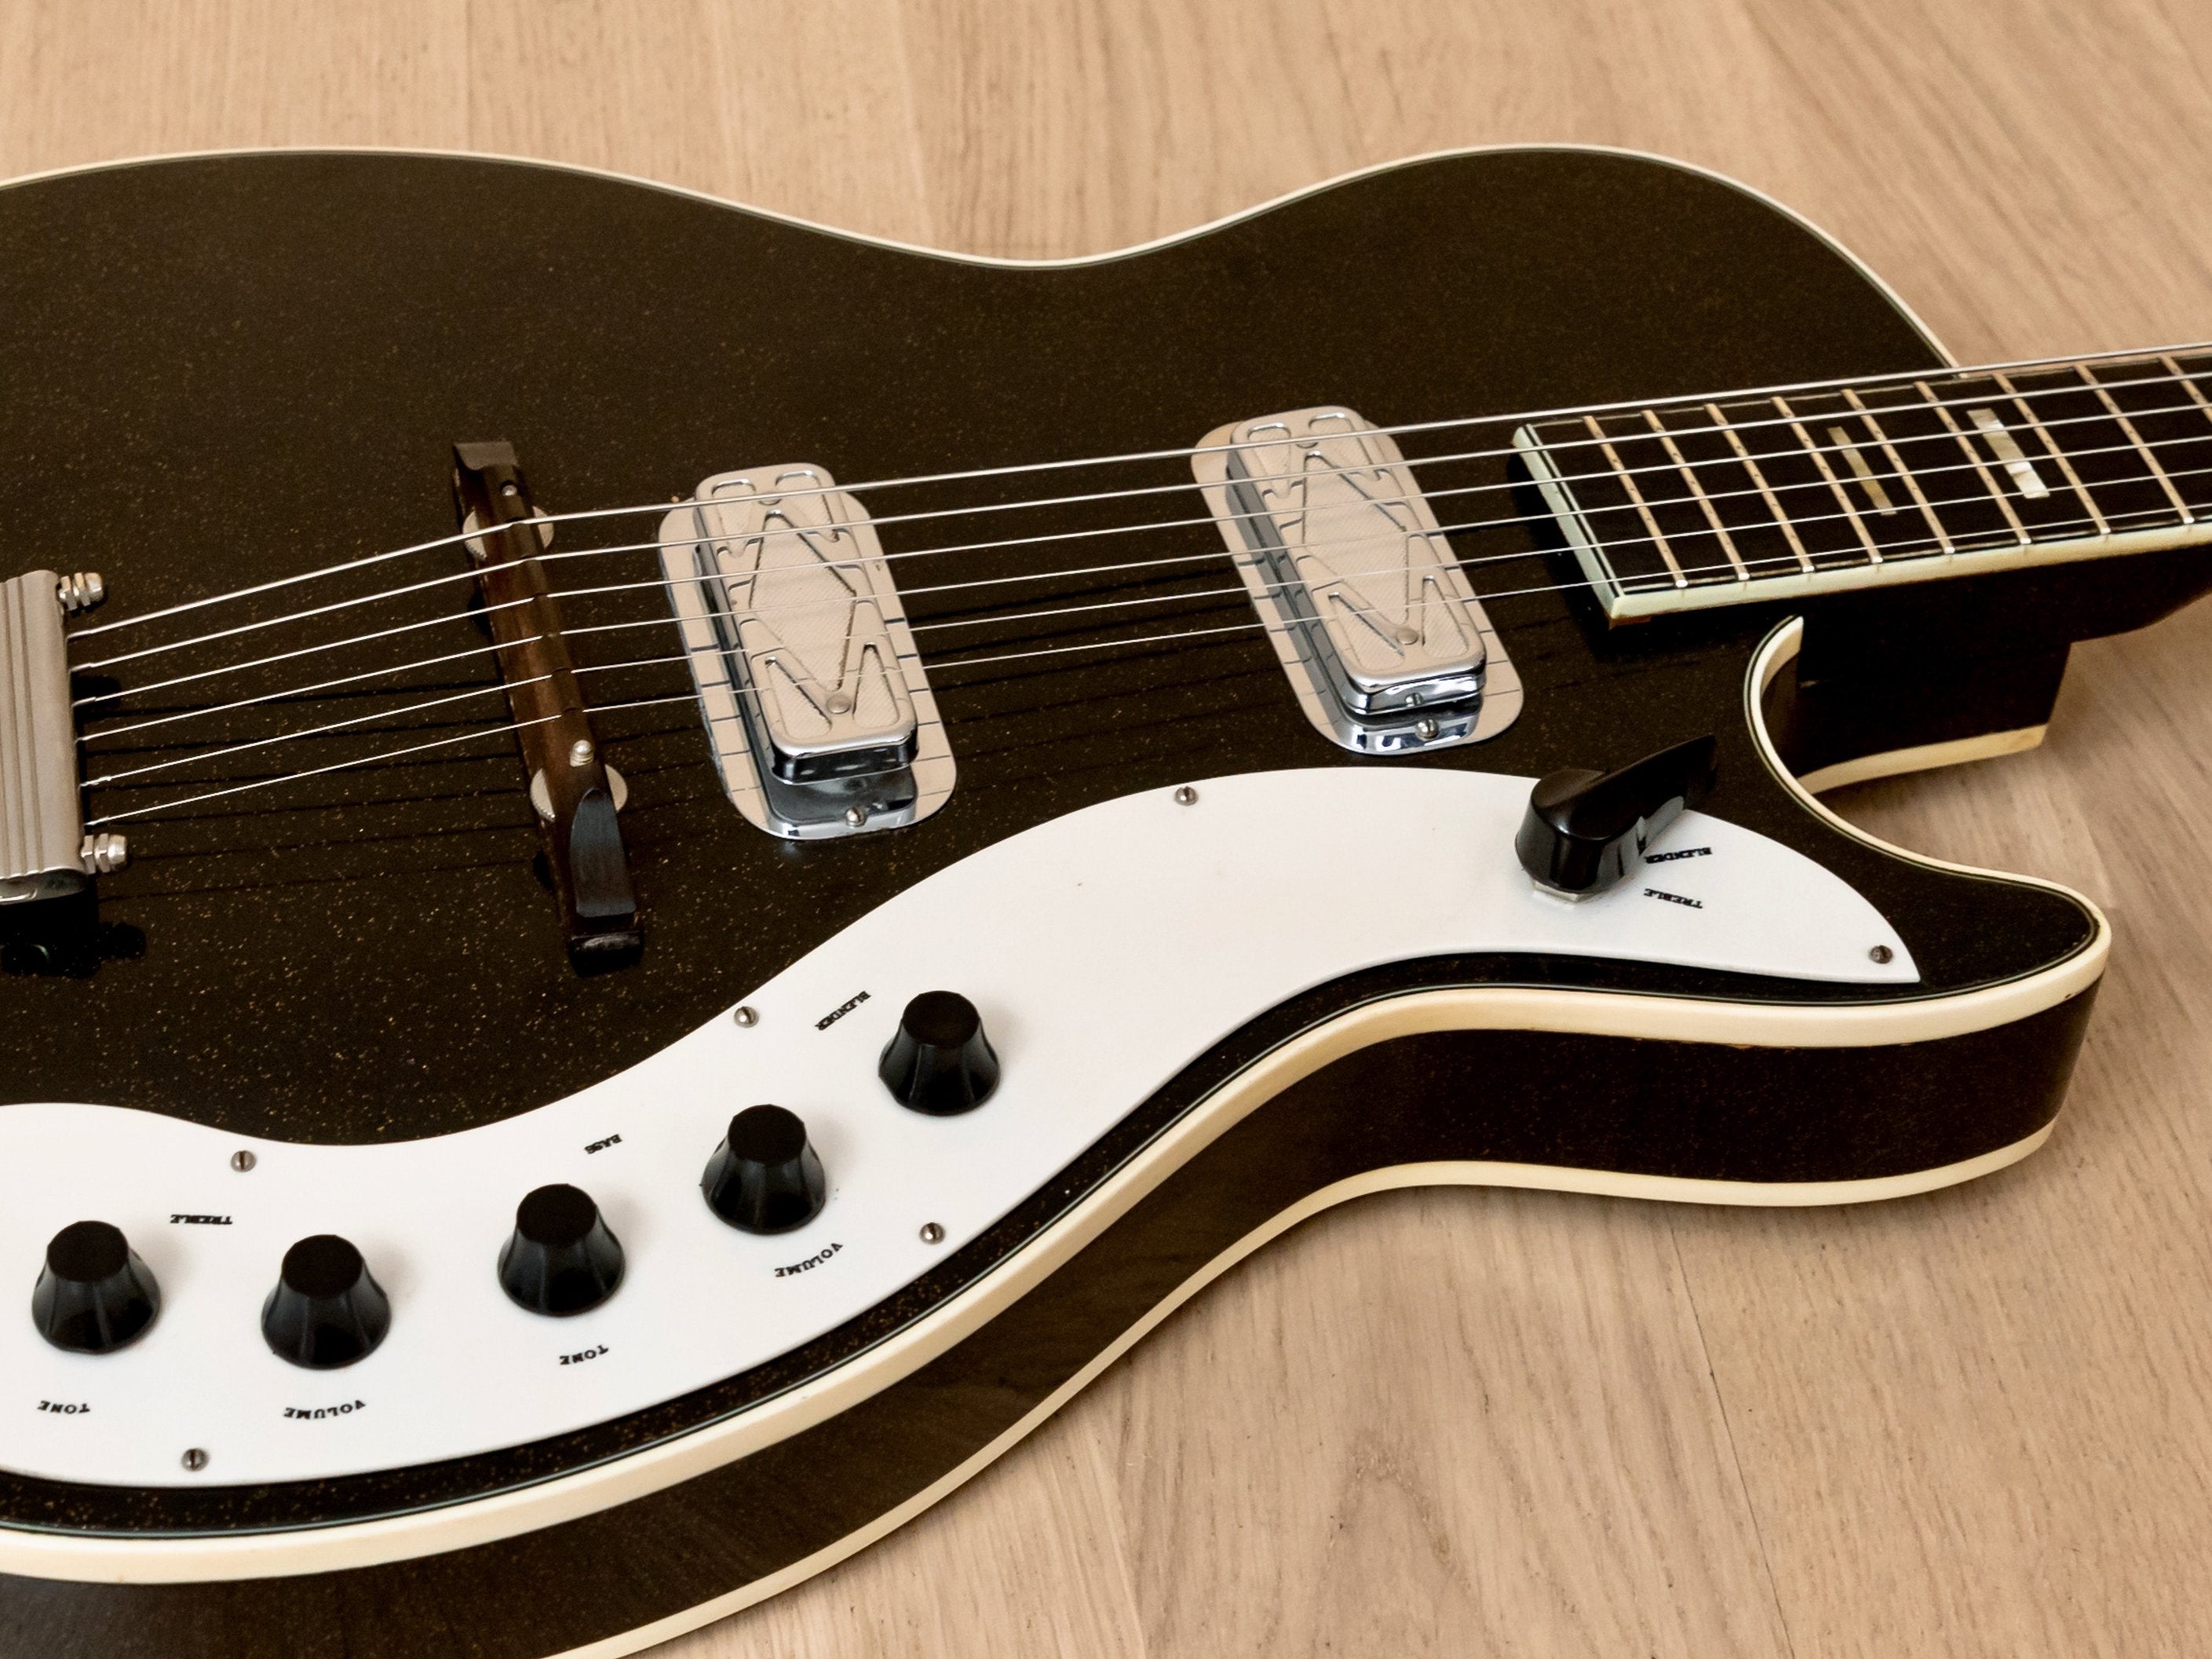 1963 Silvertone Stratotone Jupiter 1423 Vintage Guitar by Harmony USA, DeArmond Gold Foils